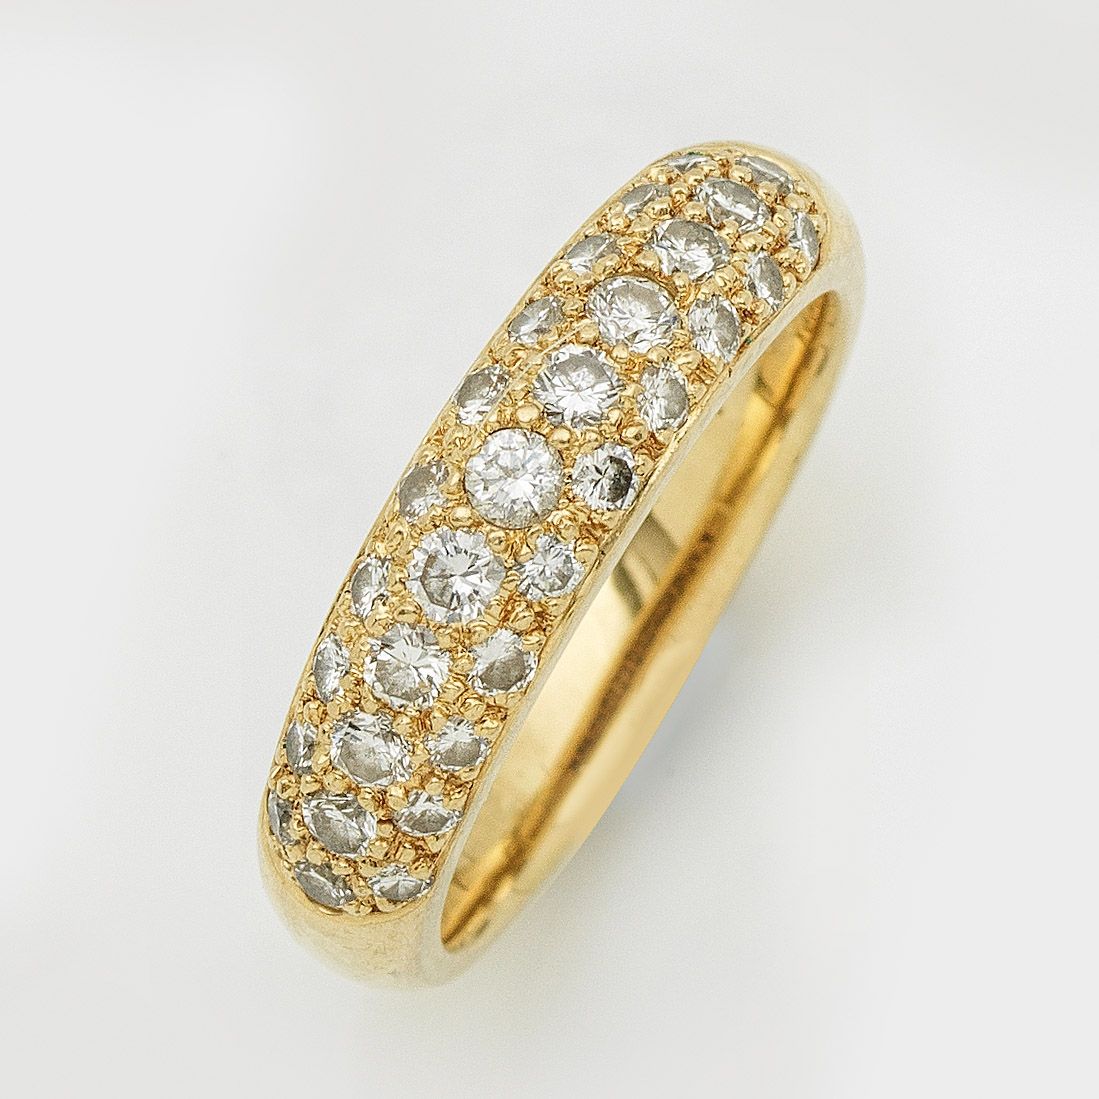 Null 黄金明亮式戒环，中央密镶明亮式切割钻石。重量约 5.51 克。
18K 金镶明亮式切割钻石戒指。